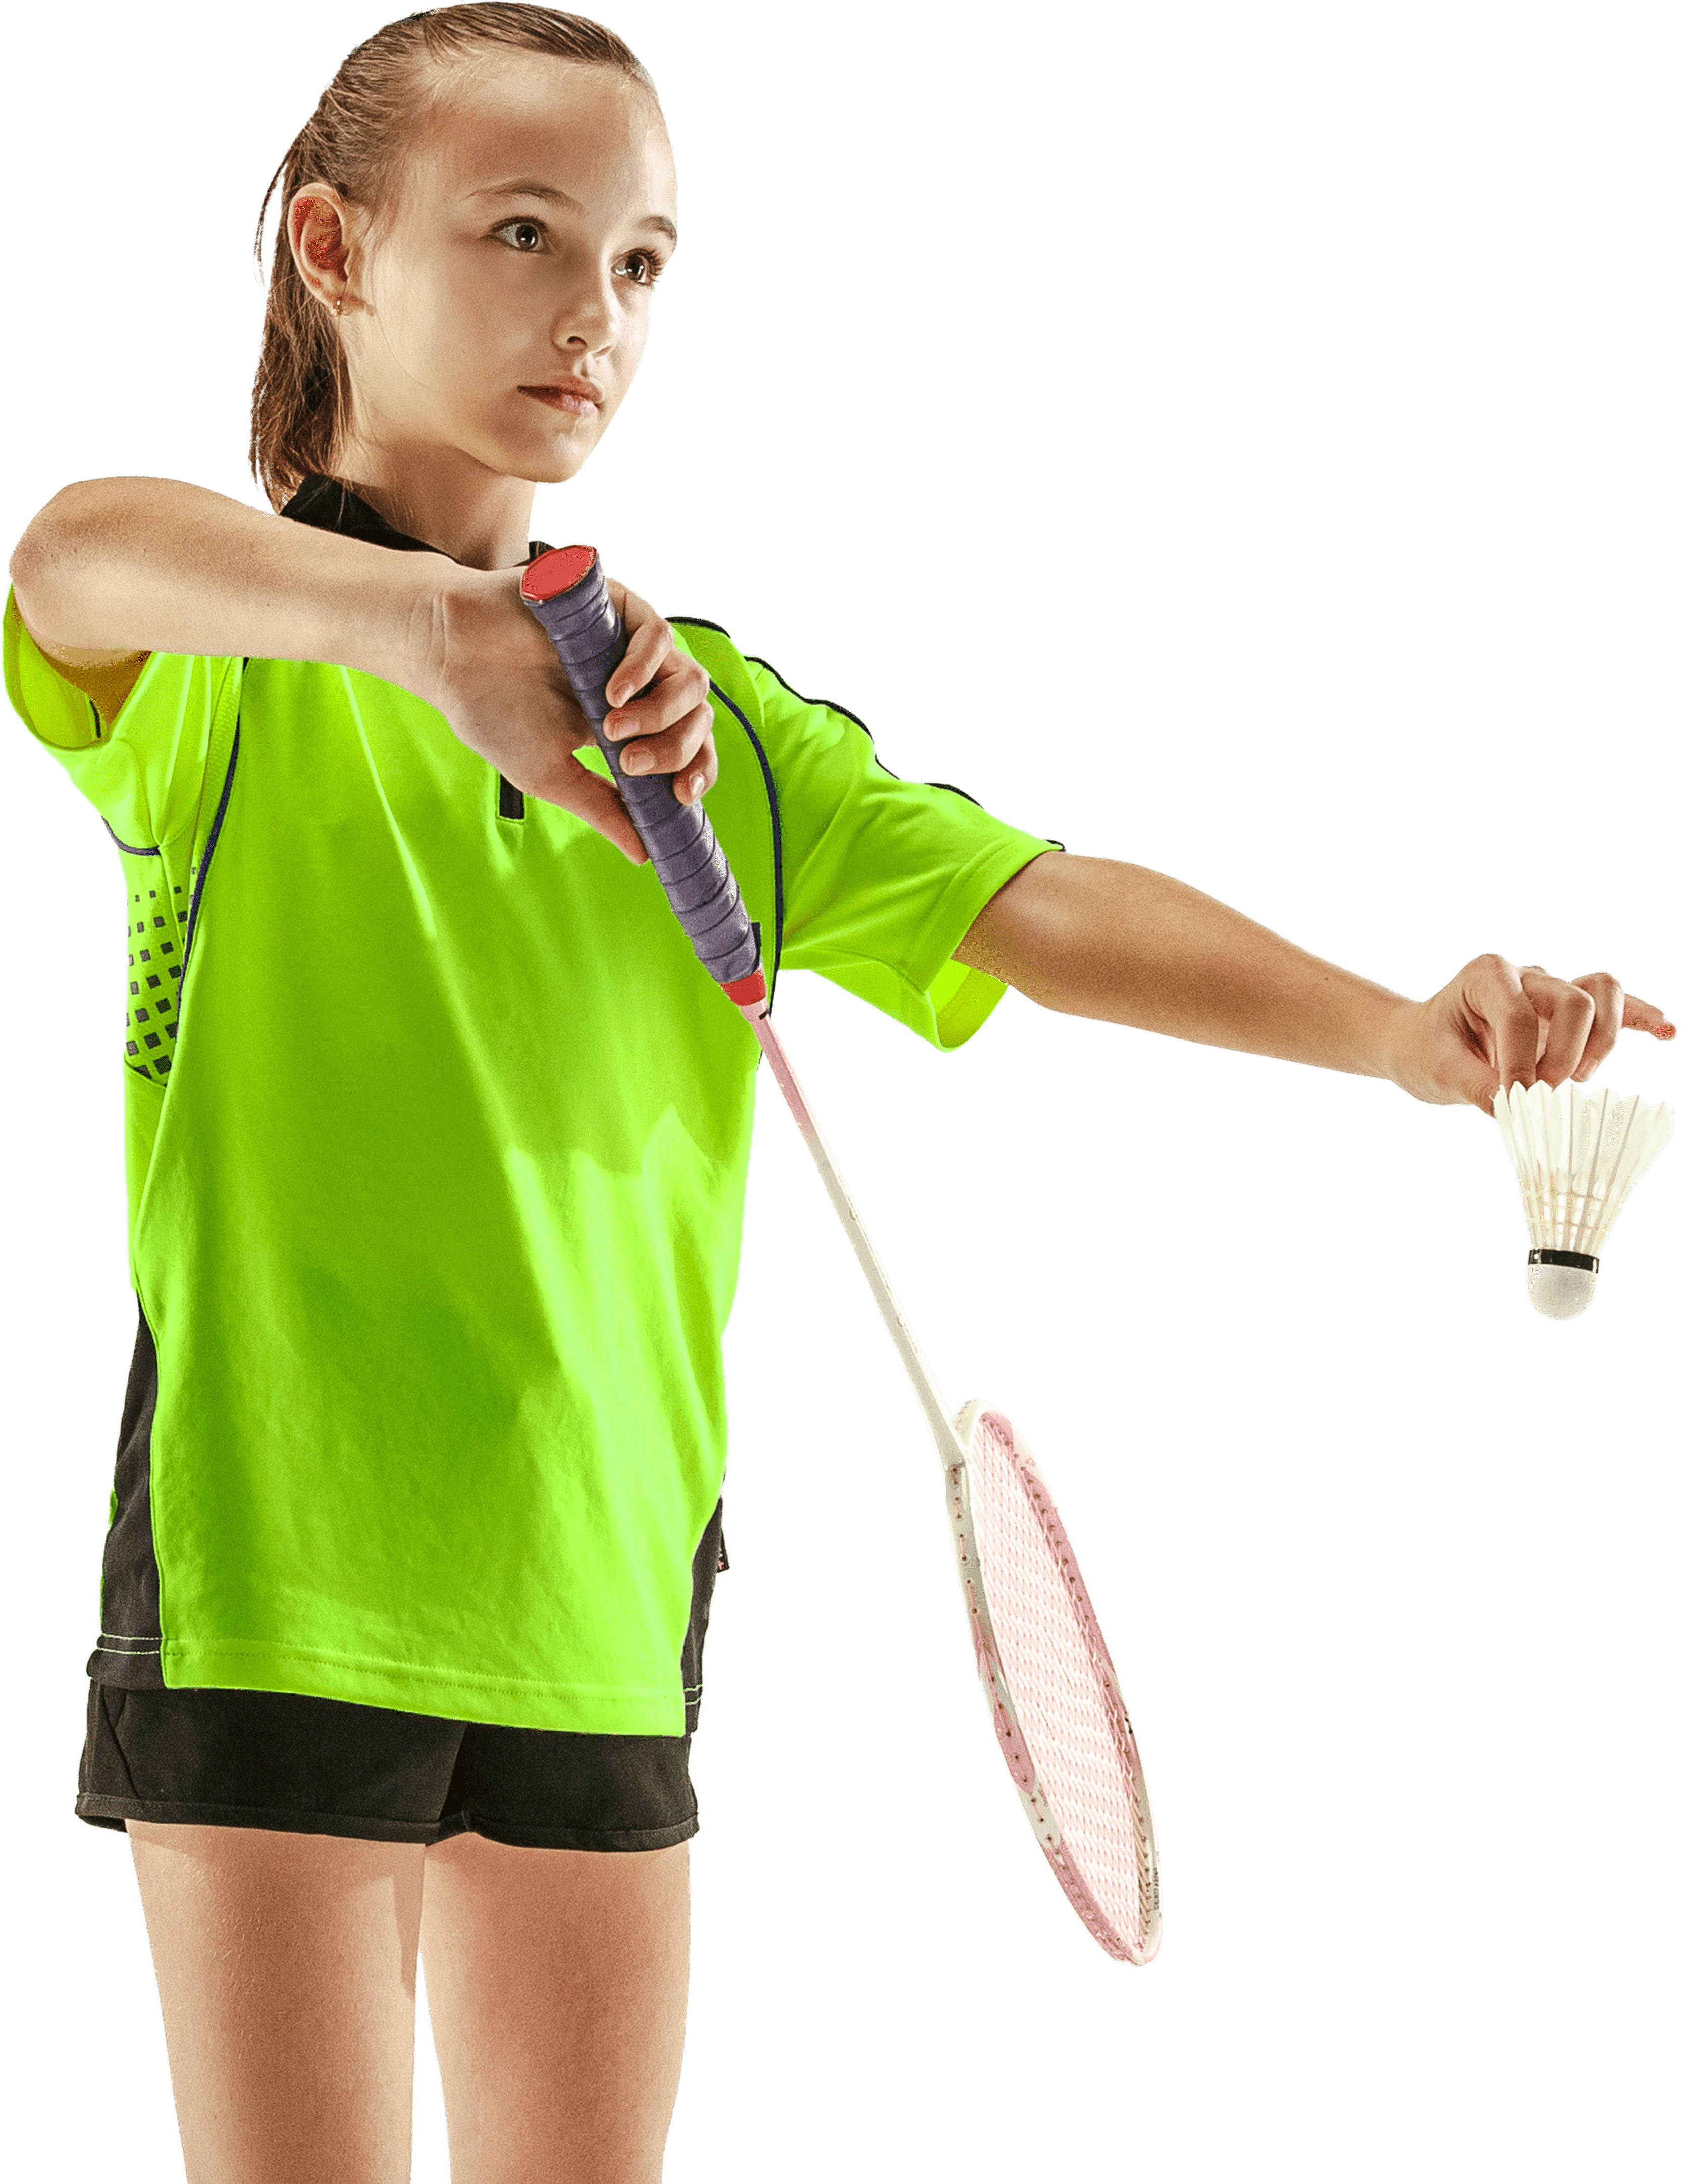 kids badminton training programs in Altona North, Melbourne